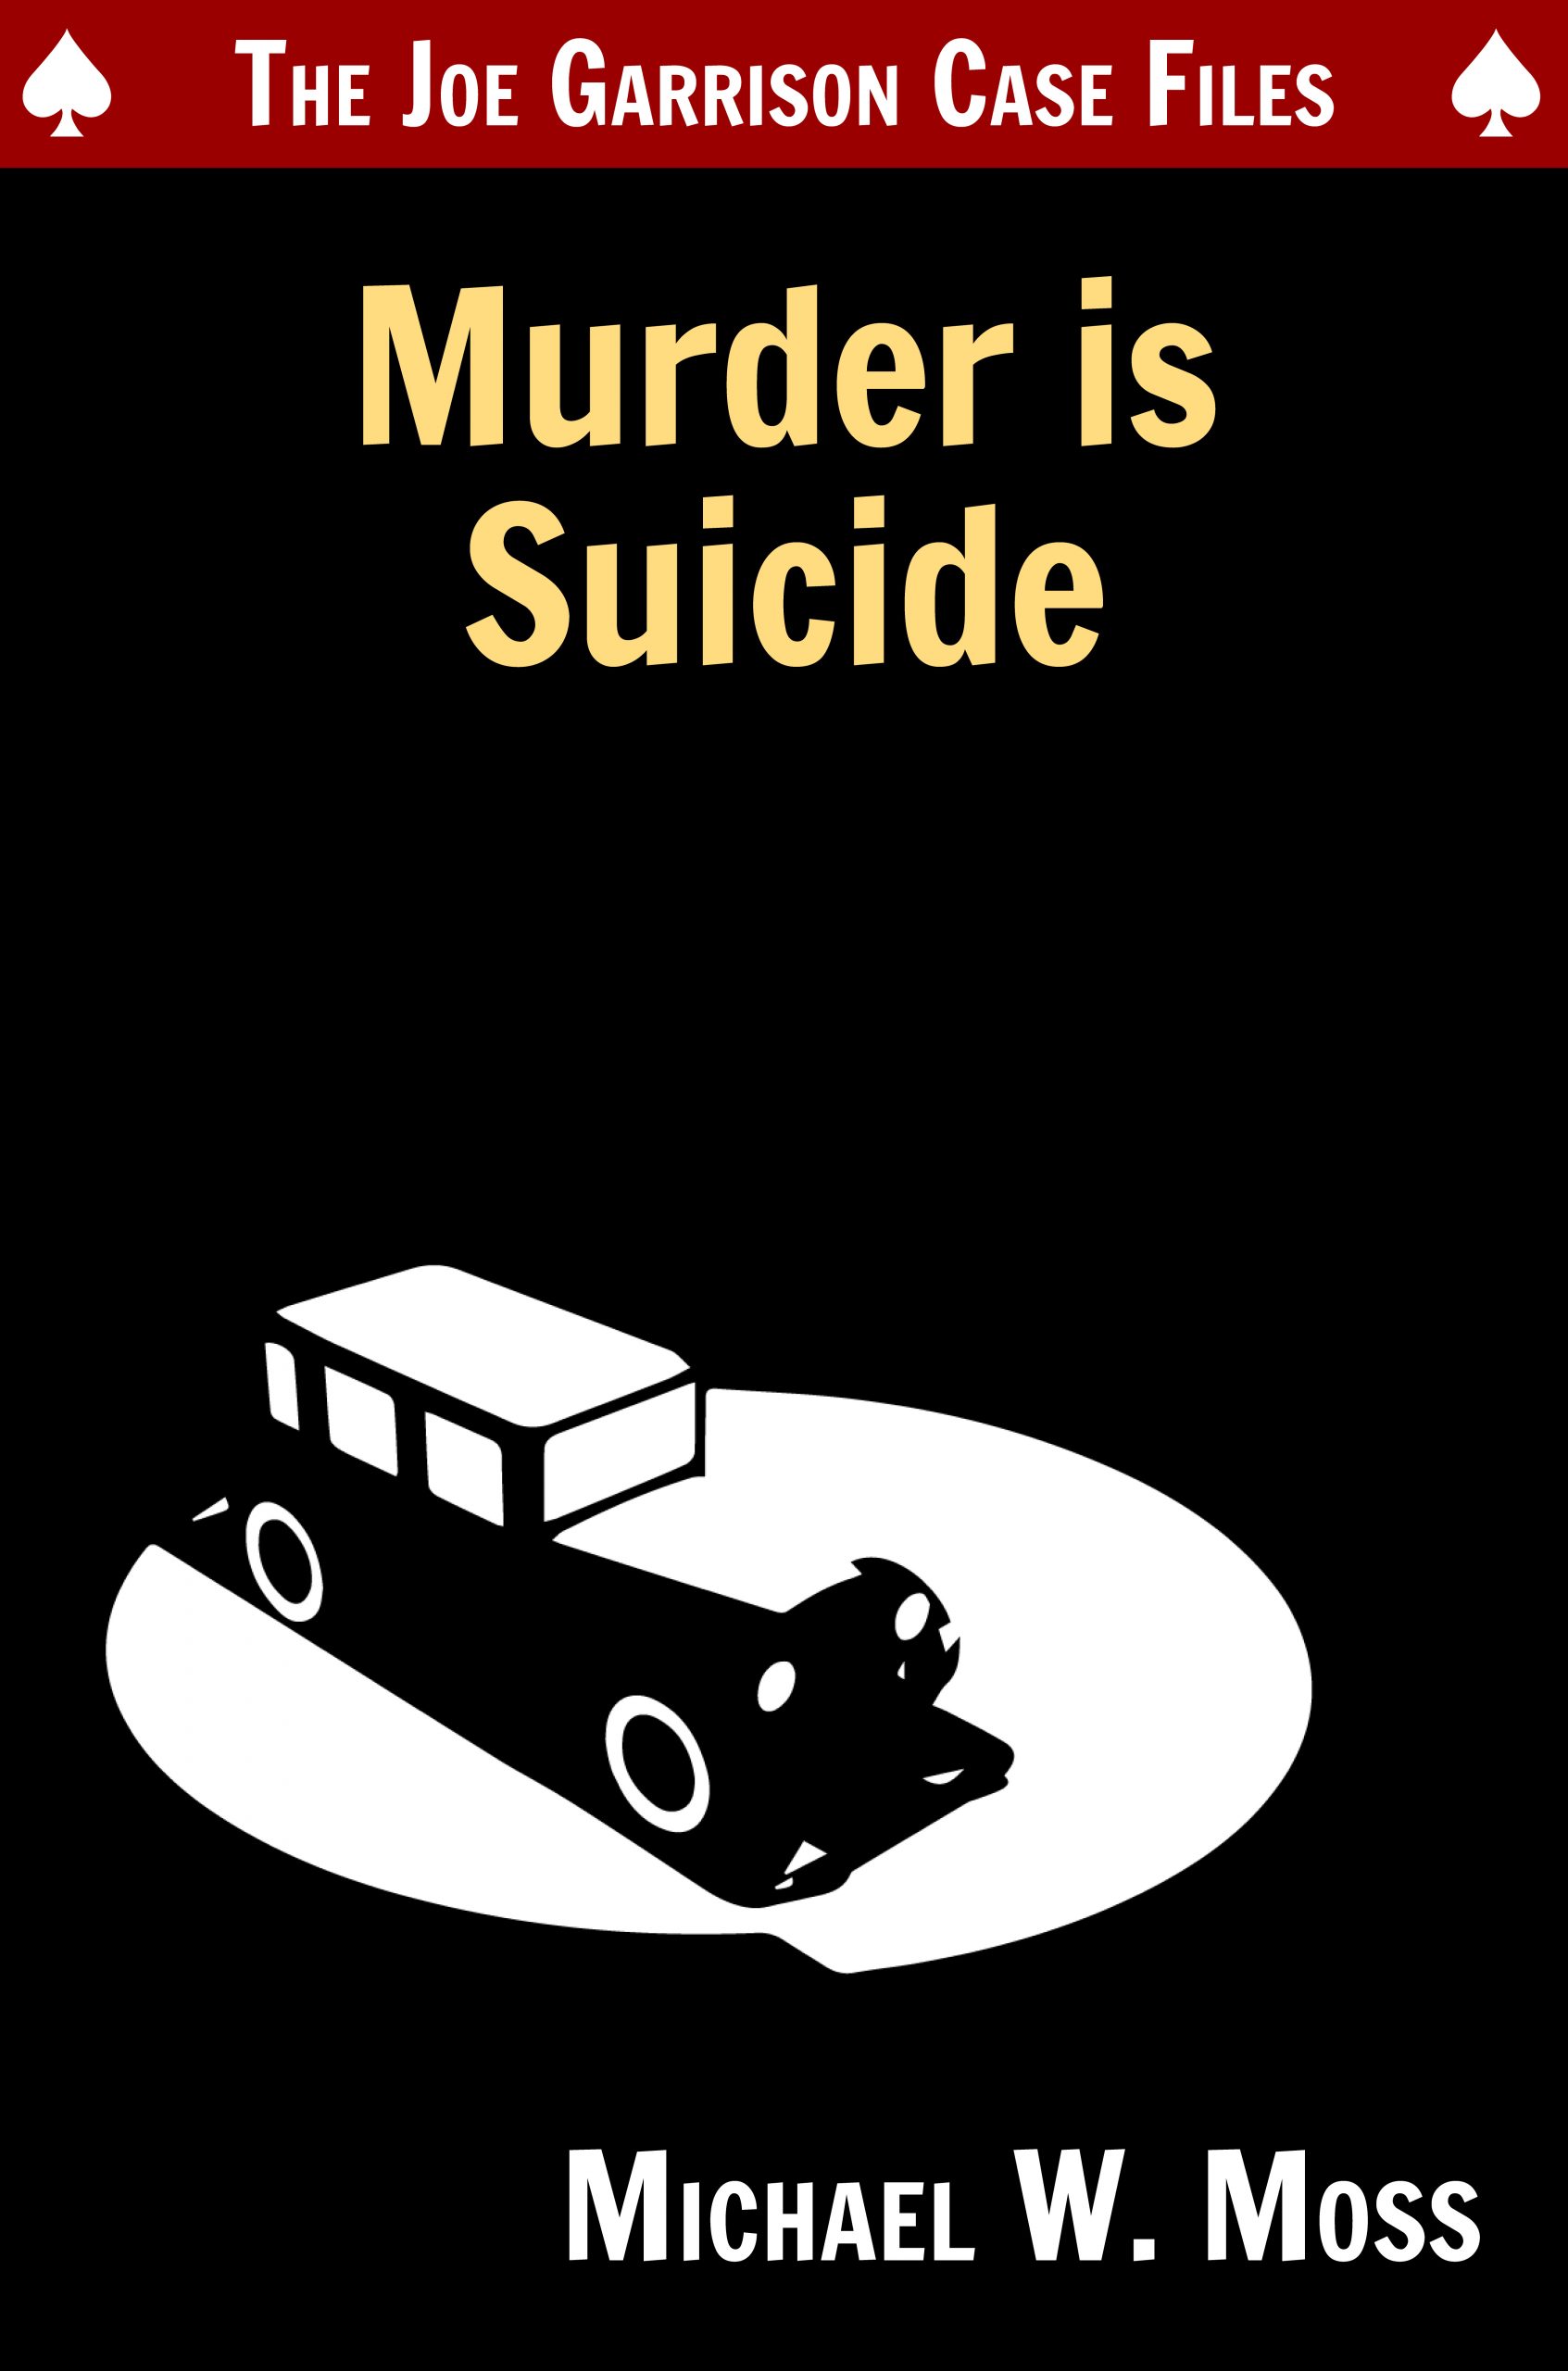 Murder is Suicide by Michael W. Moss